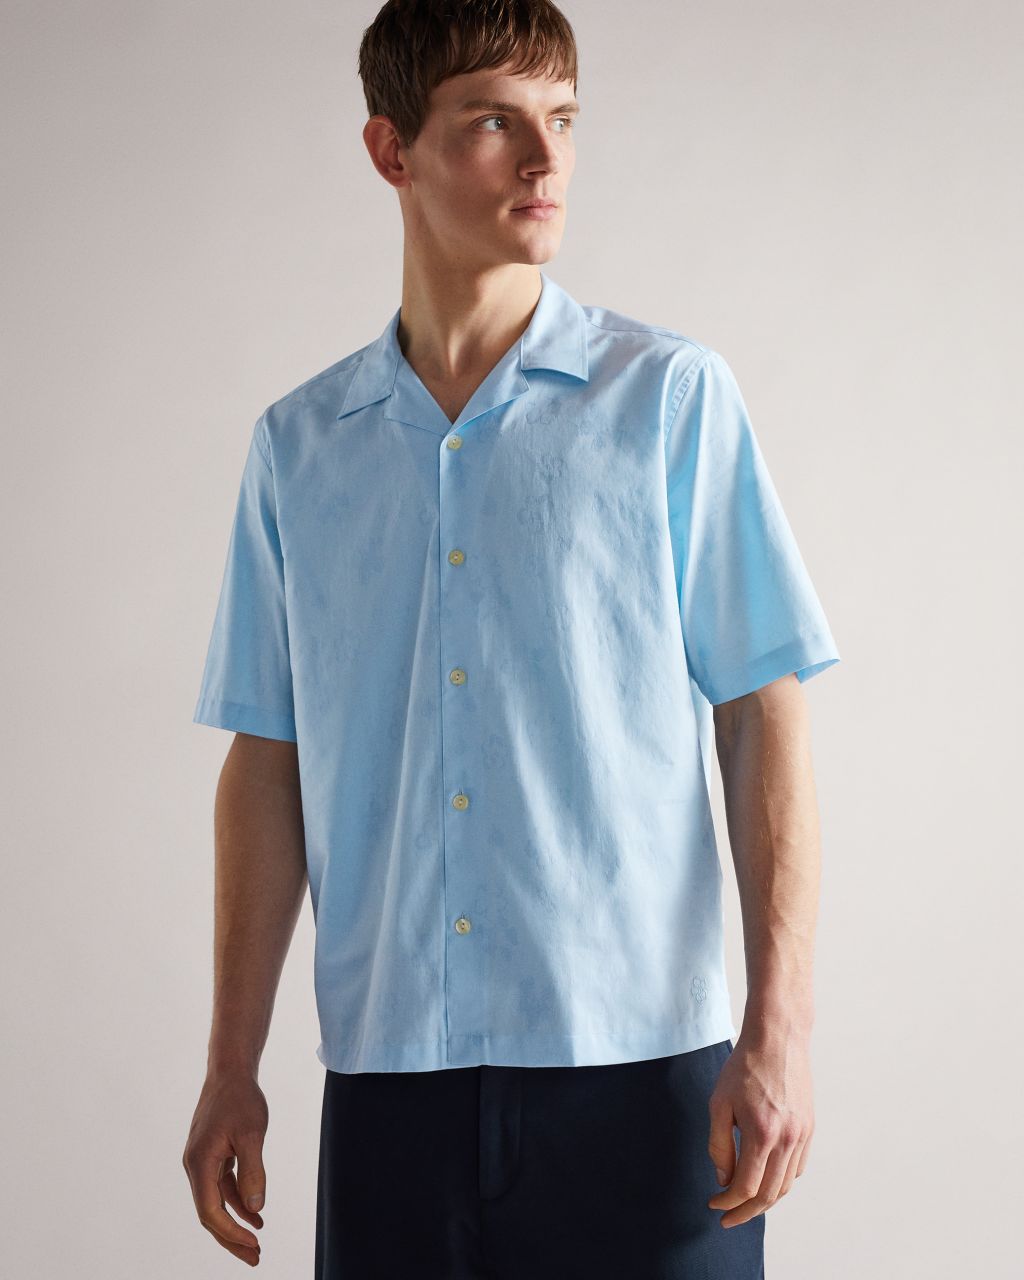 Ted Baker Men's Short Sleeve Floral Jacquard Shirt in Light Blue, Homelea, Cotton